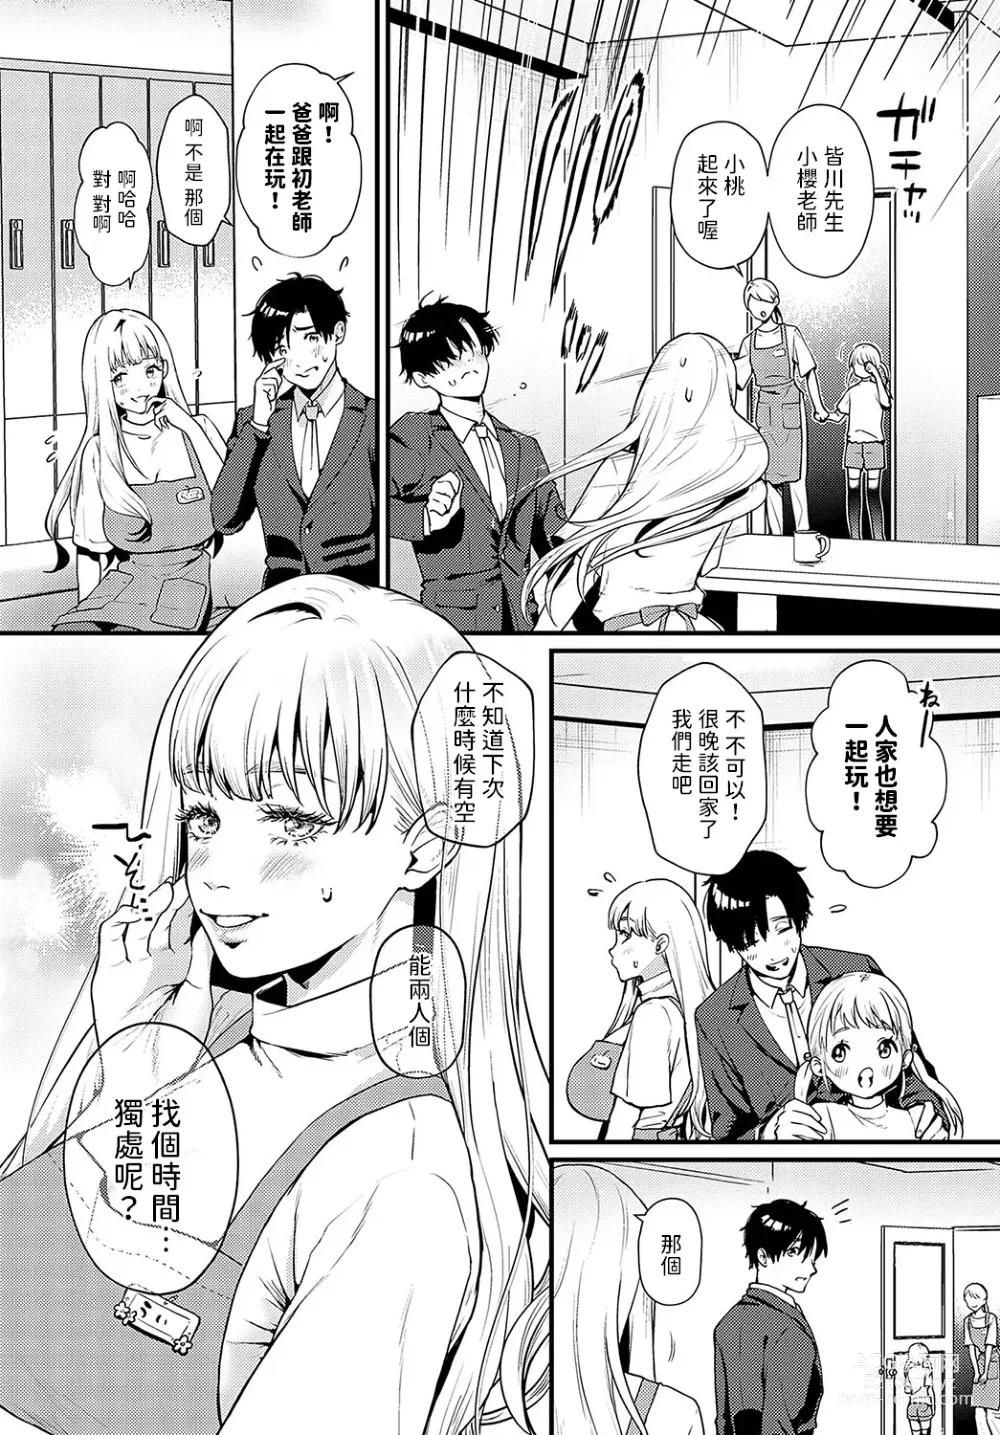 Page 7 of manga Yuuwaku Sweets Home